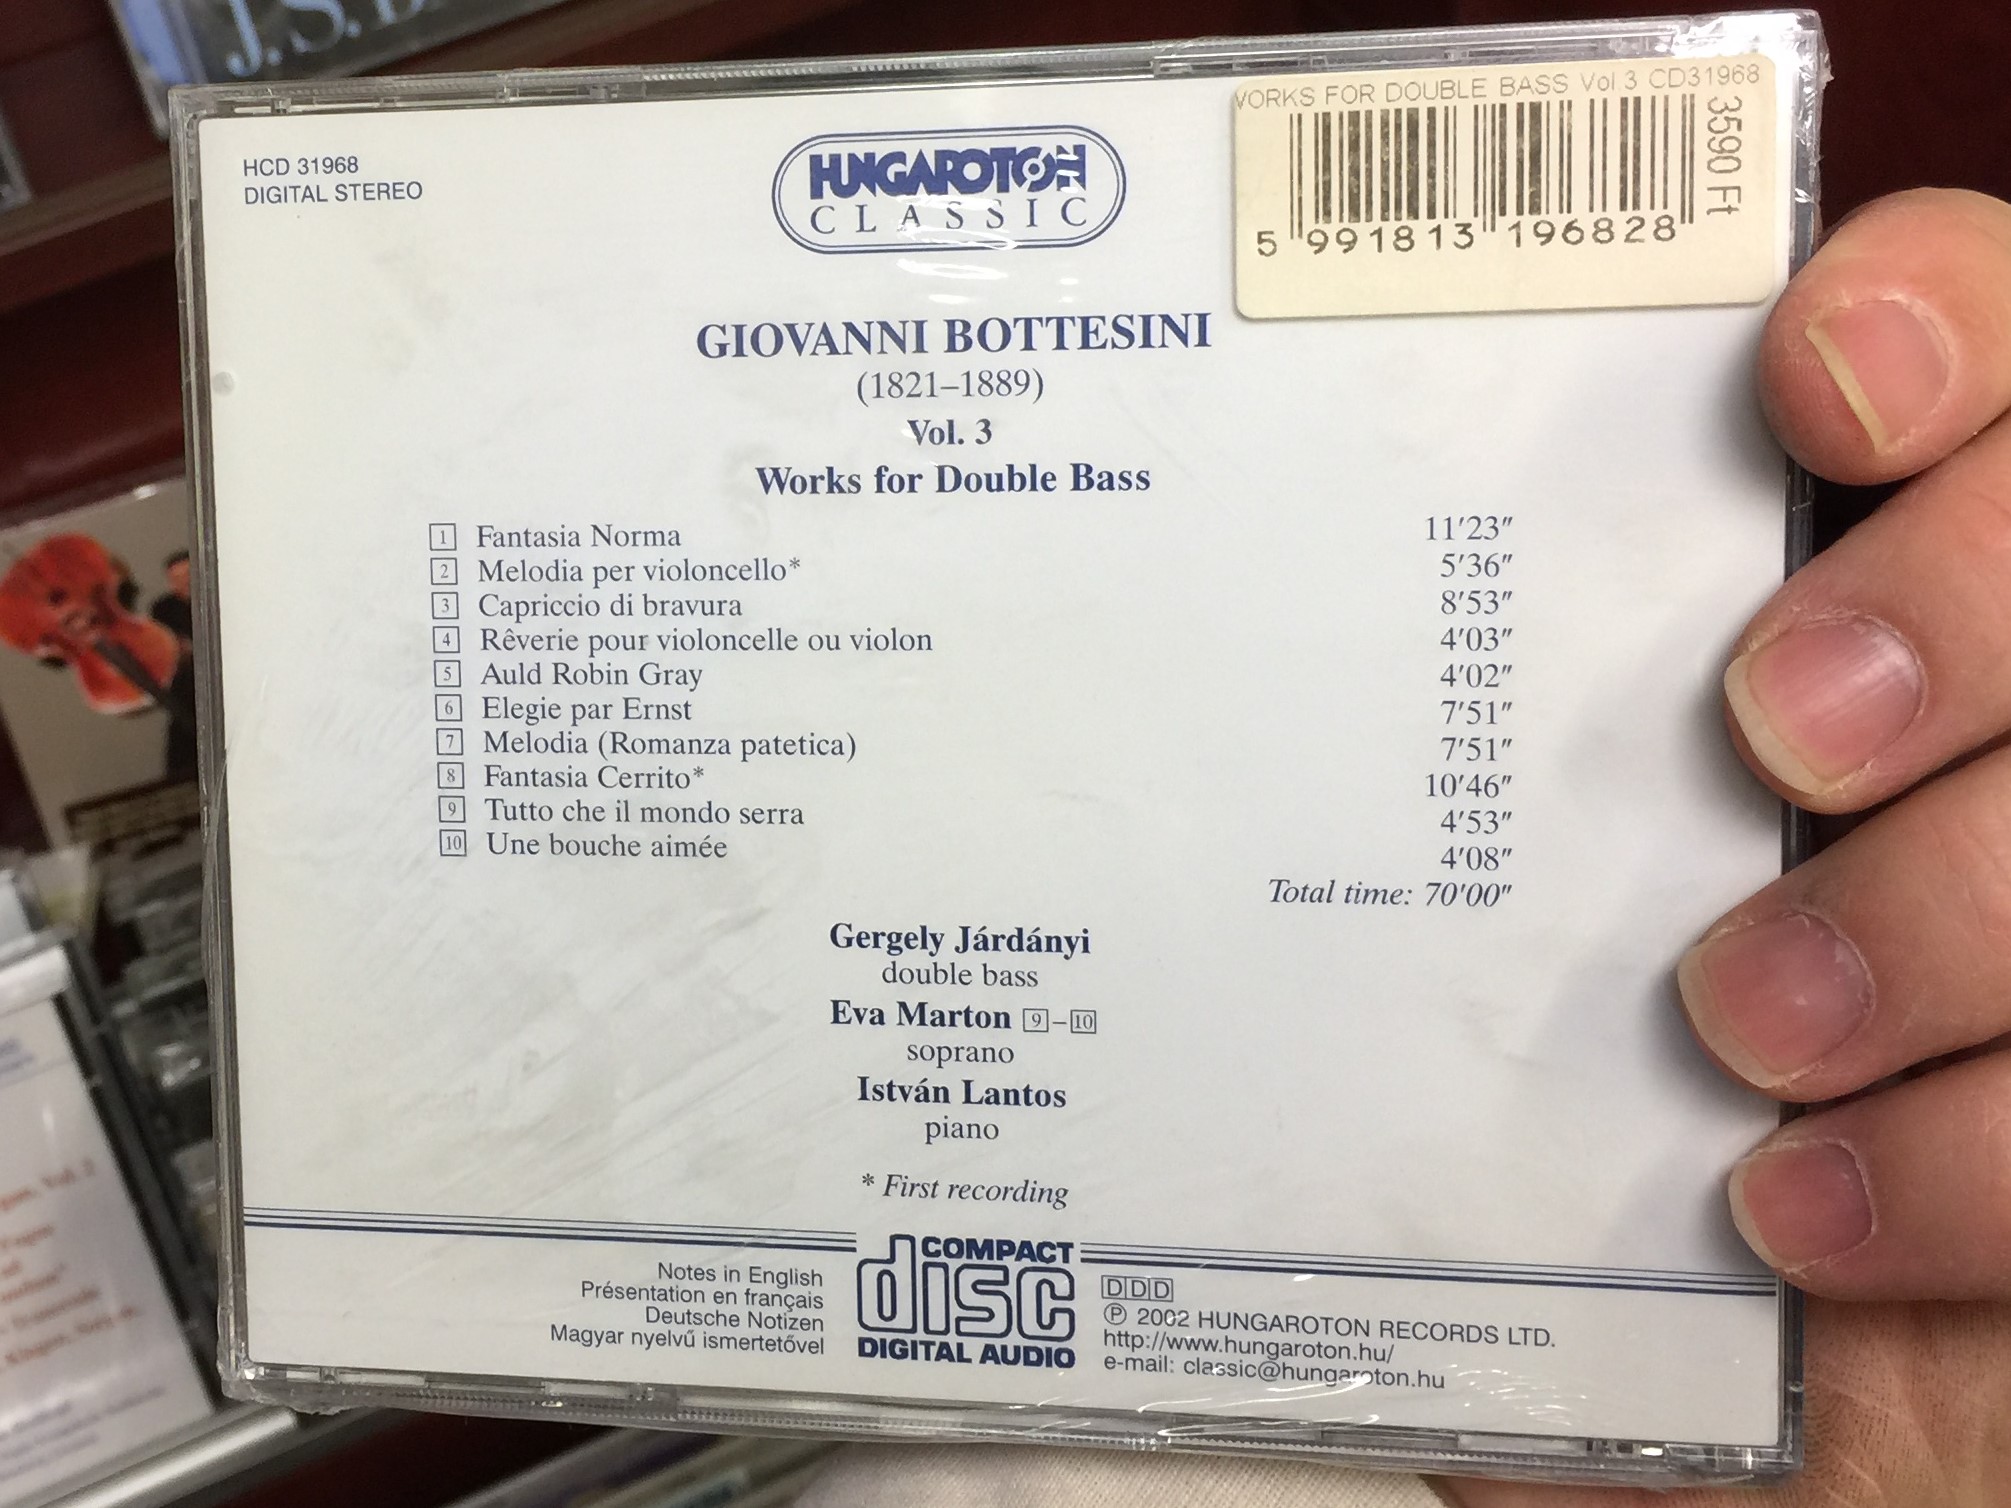 bottesini-works-for-double-bass-vol.-3-gergely-jardanyi-double-bass-eva-marton-soprano-istvan-lantos-piano-hungaroton-classic-audio-cd-2002-stereo-hcd-31968-2-.jpg